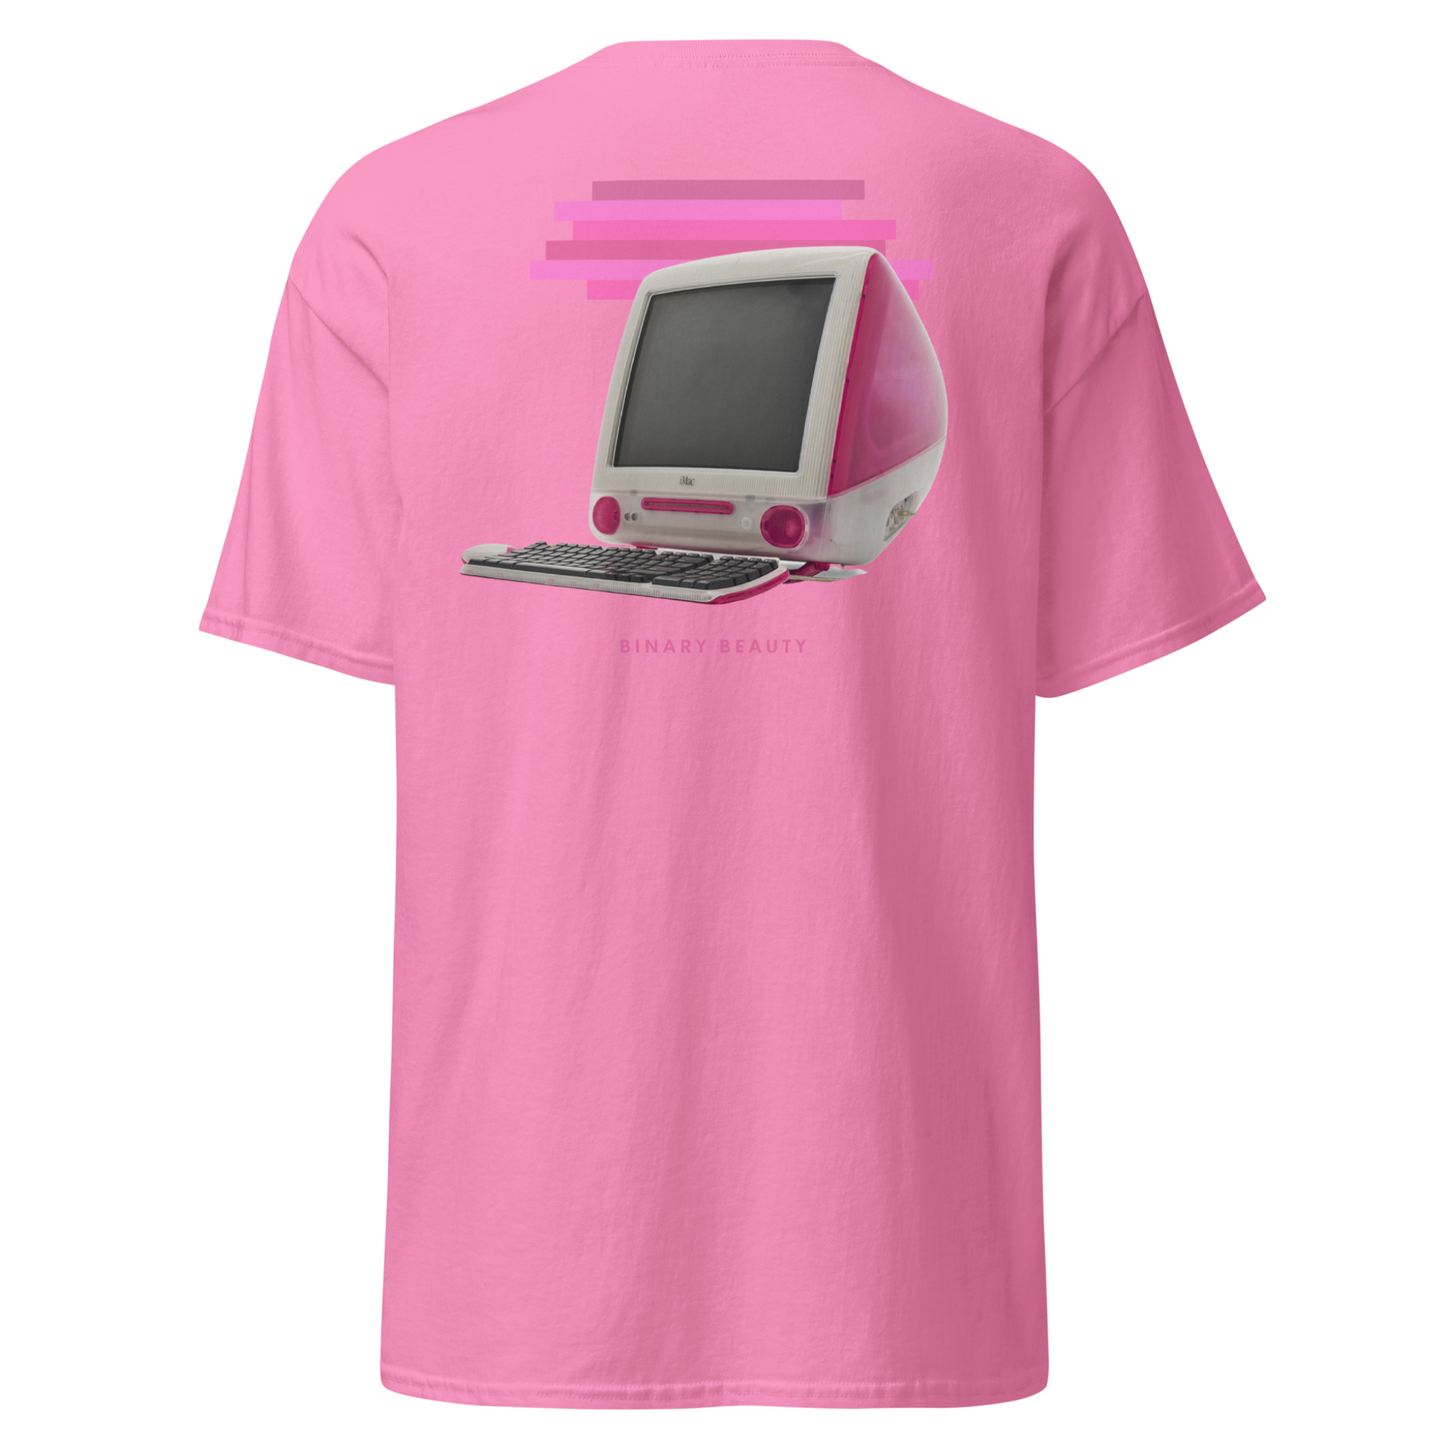 iCandy Softwear Shirt in Pink